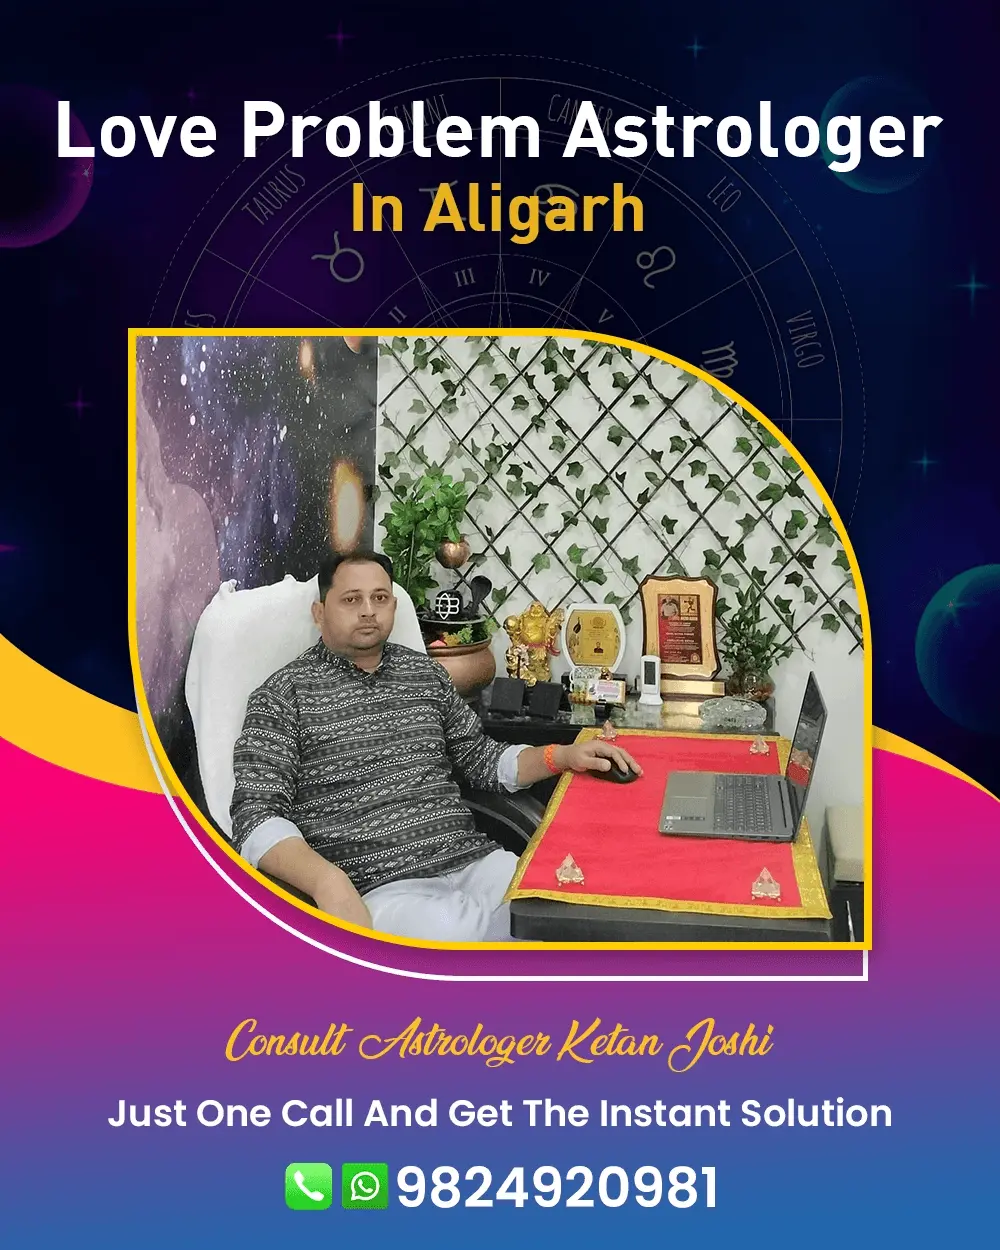 Love Problem Astrologer In Aligarh